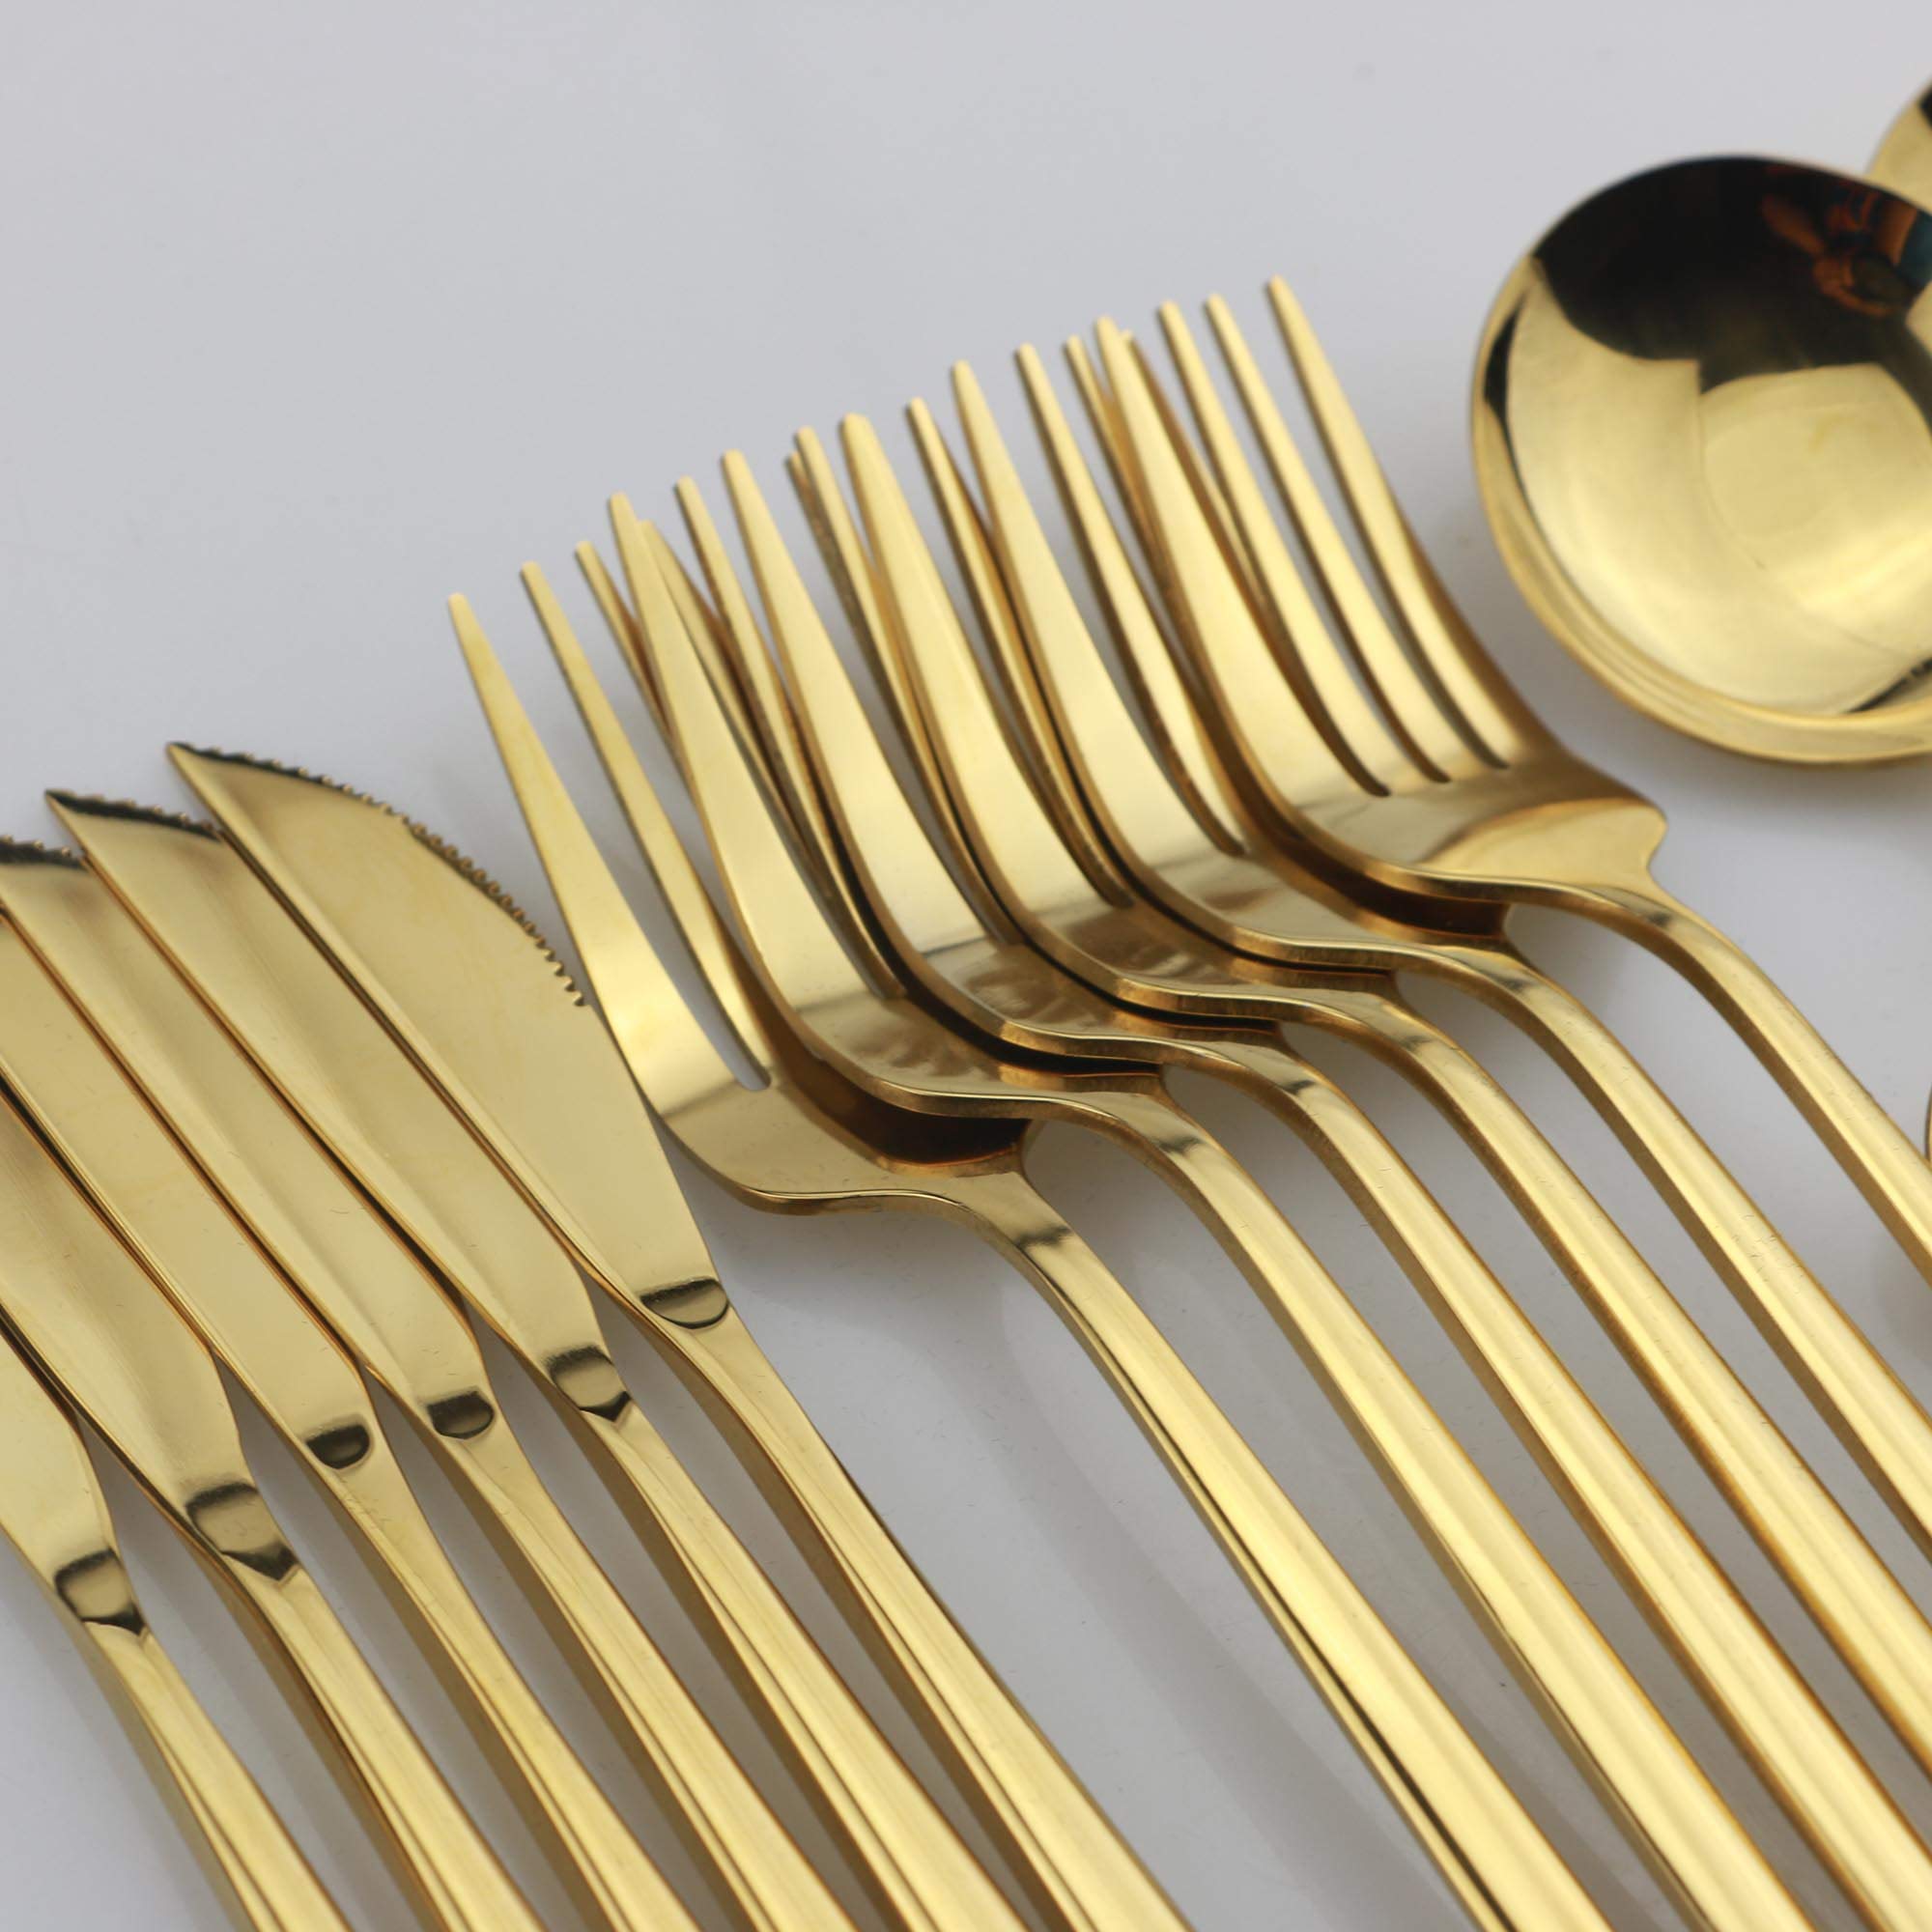 JANKNG 24-Piece Flatware Set, 18/0 Stainless Steel Knife Fork Spoon Teaspoon Silverware Set, Service for 6, MIrror Gold